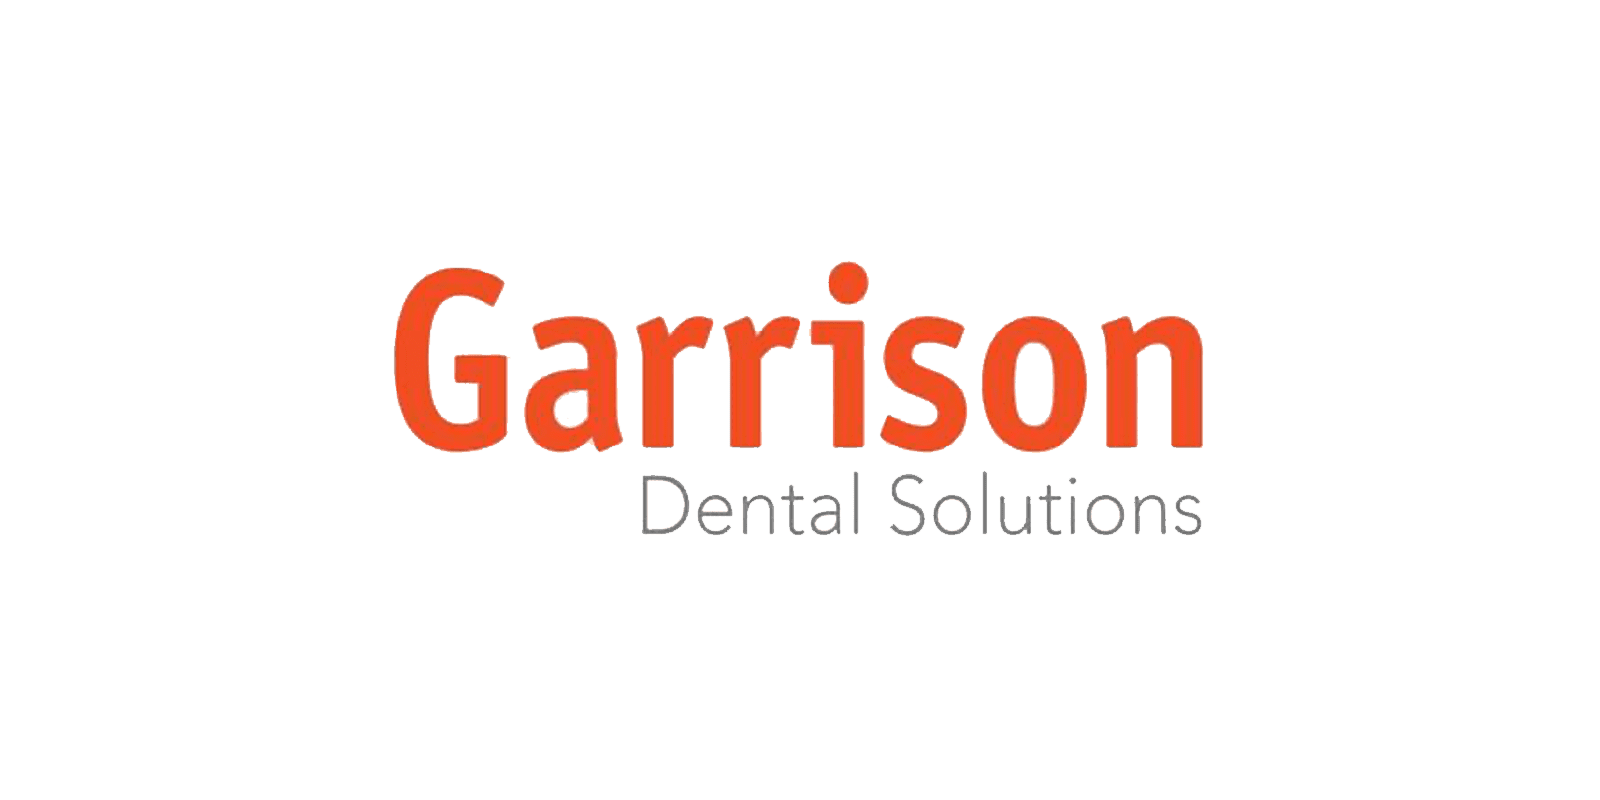 ICS Data - Garrison Dental Solutions